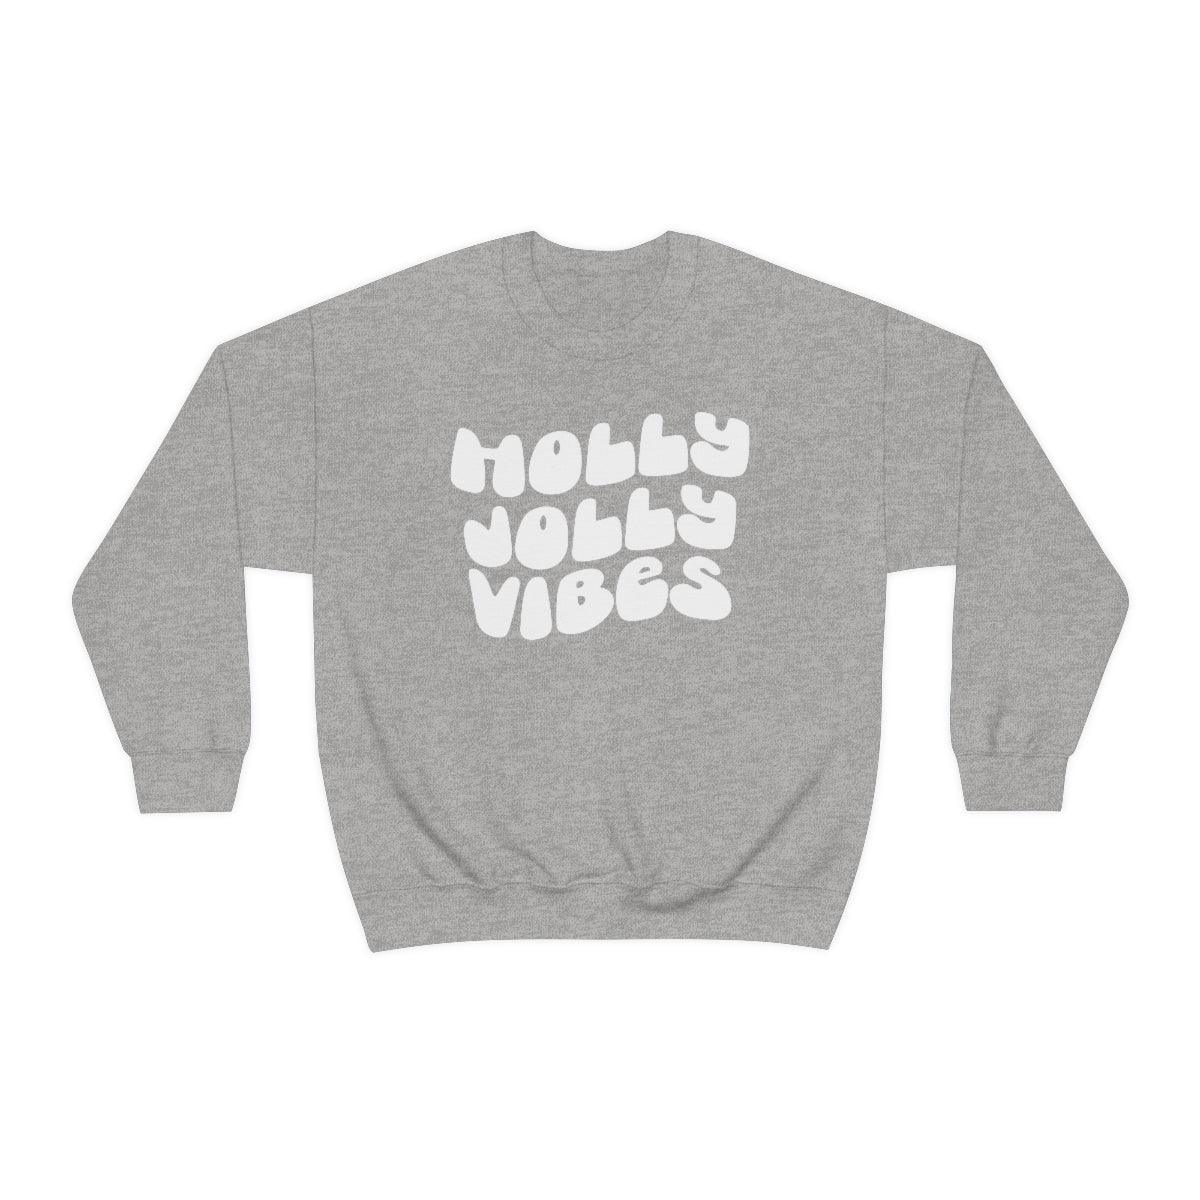 Retro Holly Jolly Vibes Christmas Crewneck Sweater - Crystal Rose Design Co.